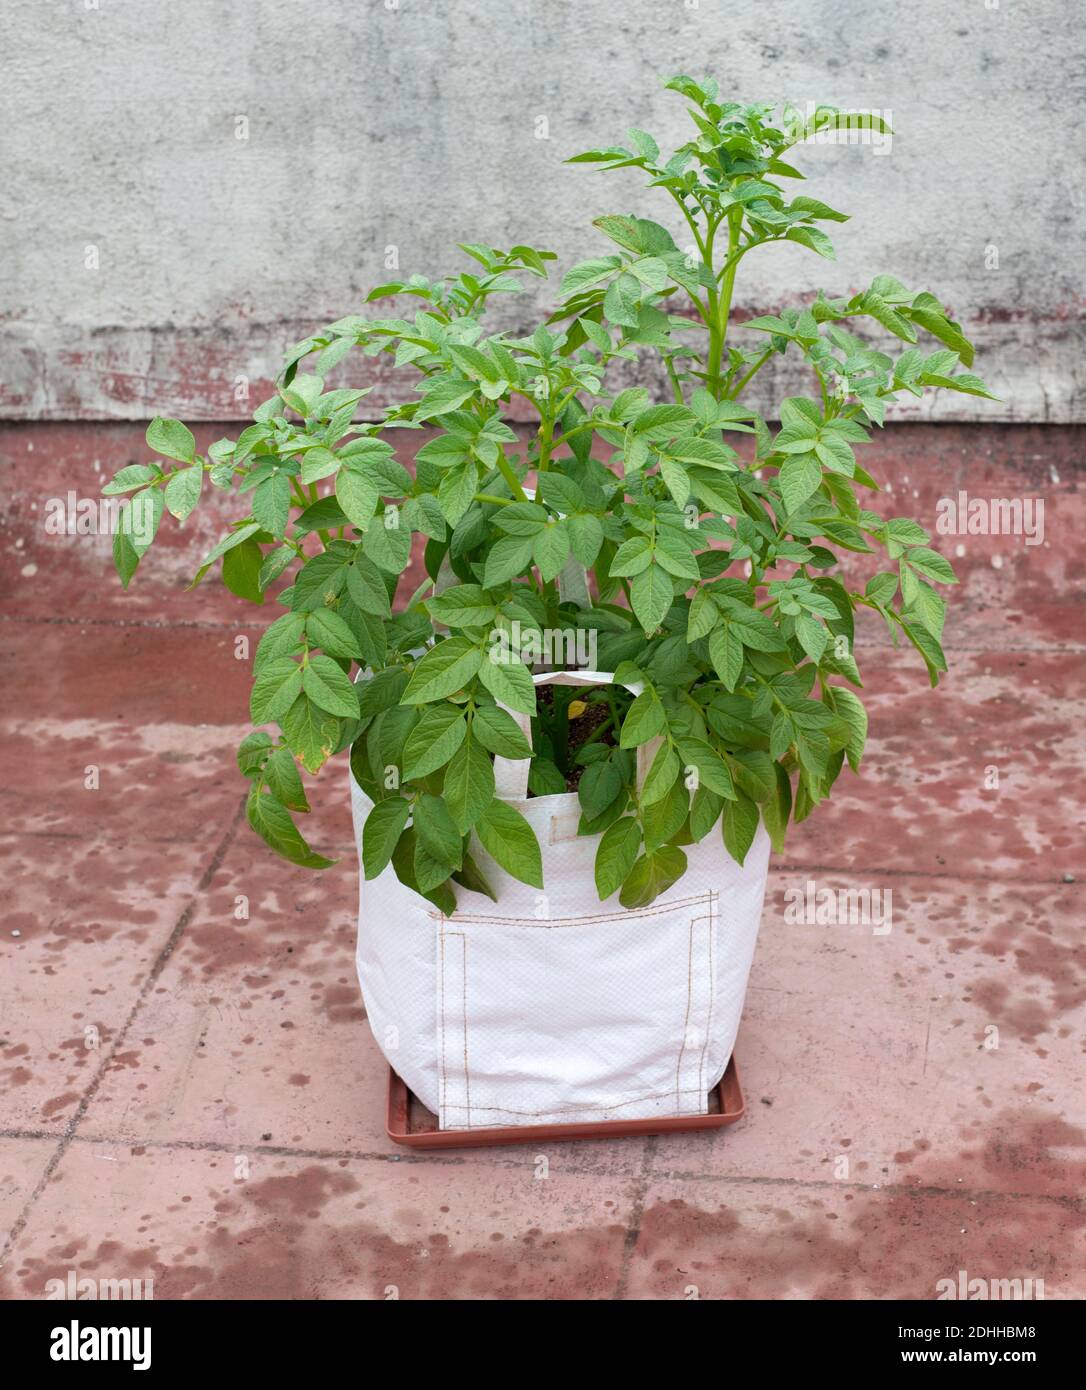 https://c8.alamy.com/comp/2DHHBM8/potato-plant-growing-in-polythene-grow-bag-on-terrace-2DHHBM8.jpg